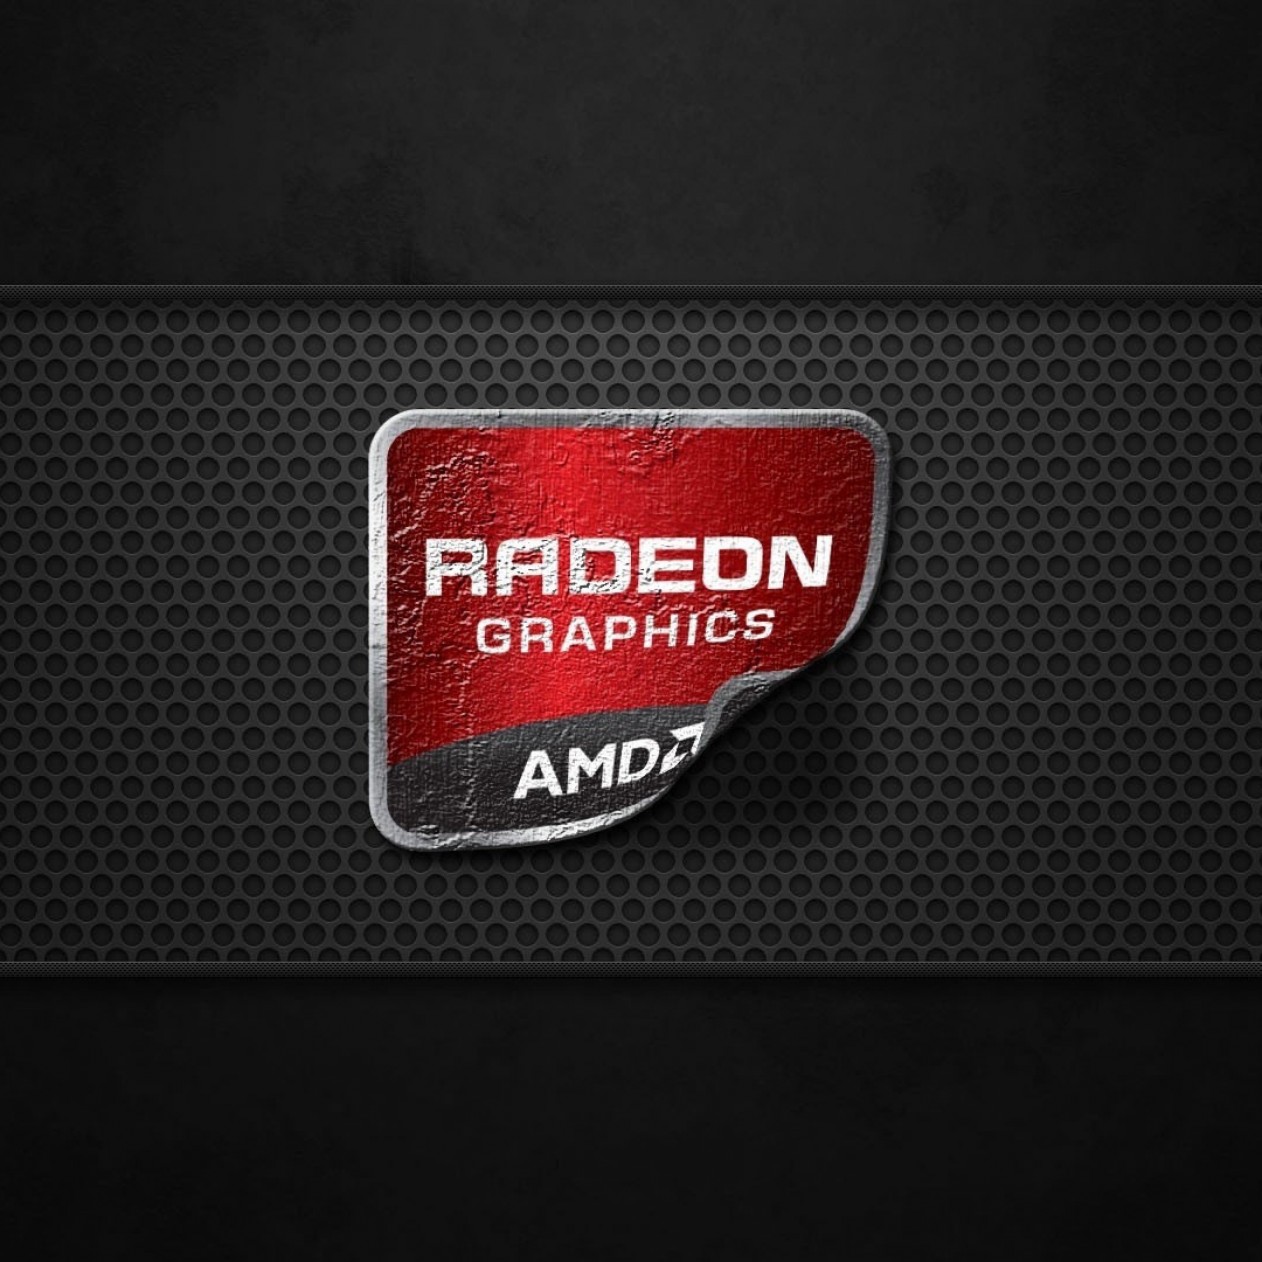 AMD Radeon Graphics Wallpaper for Apple iPad mini